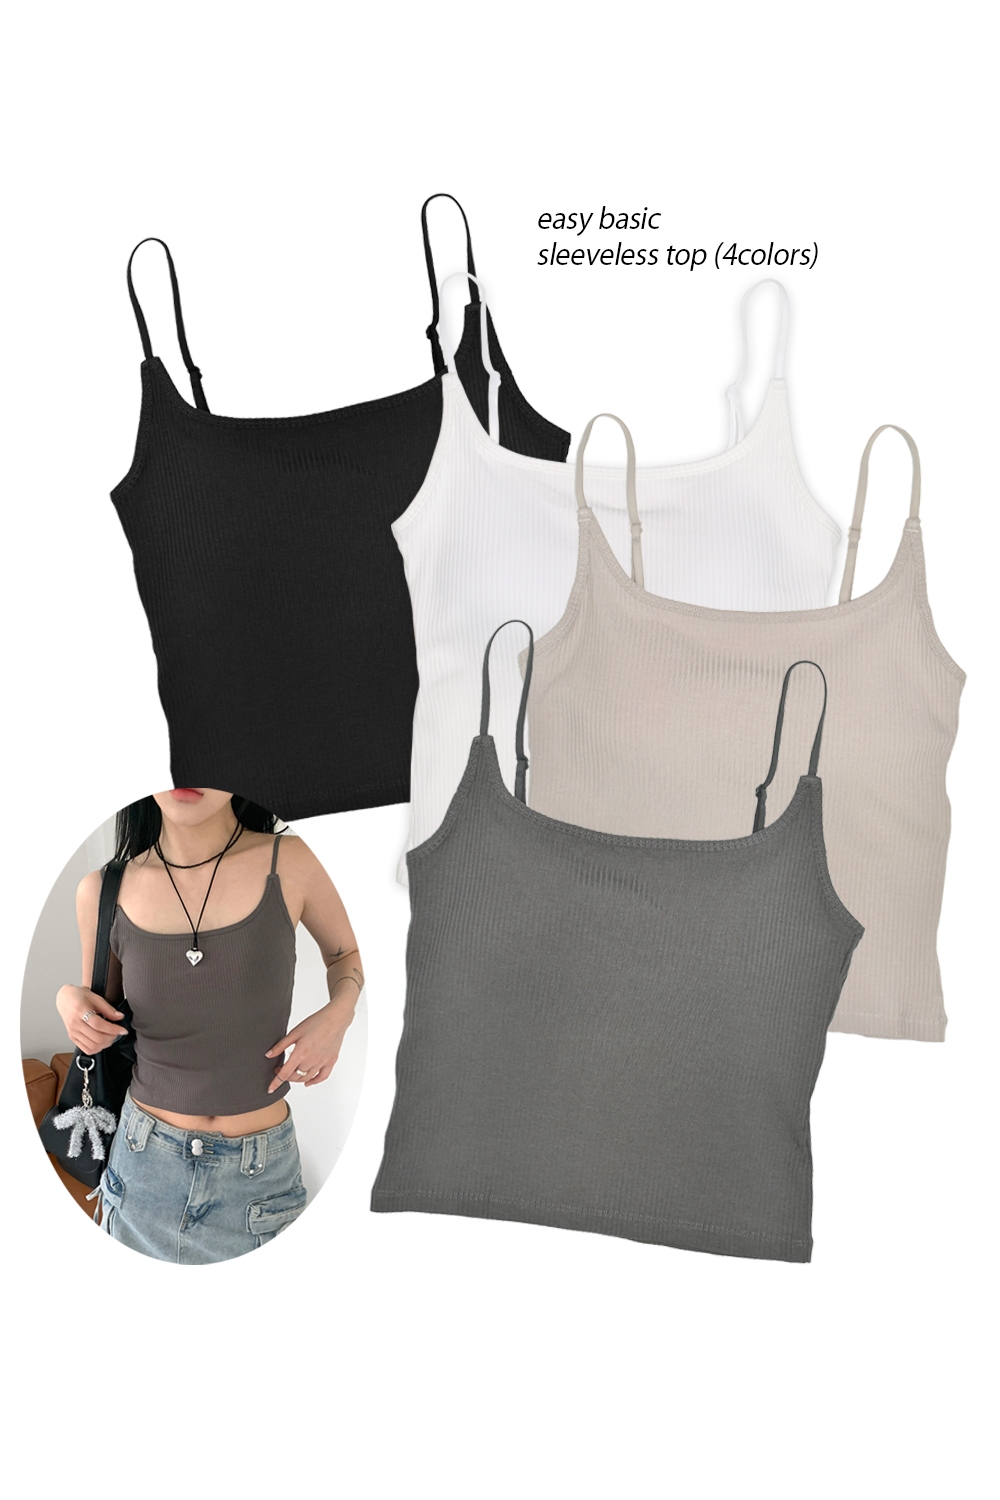 easy basic sleeveless top (4colors)